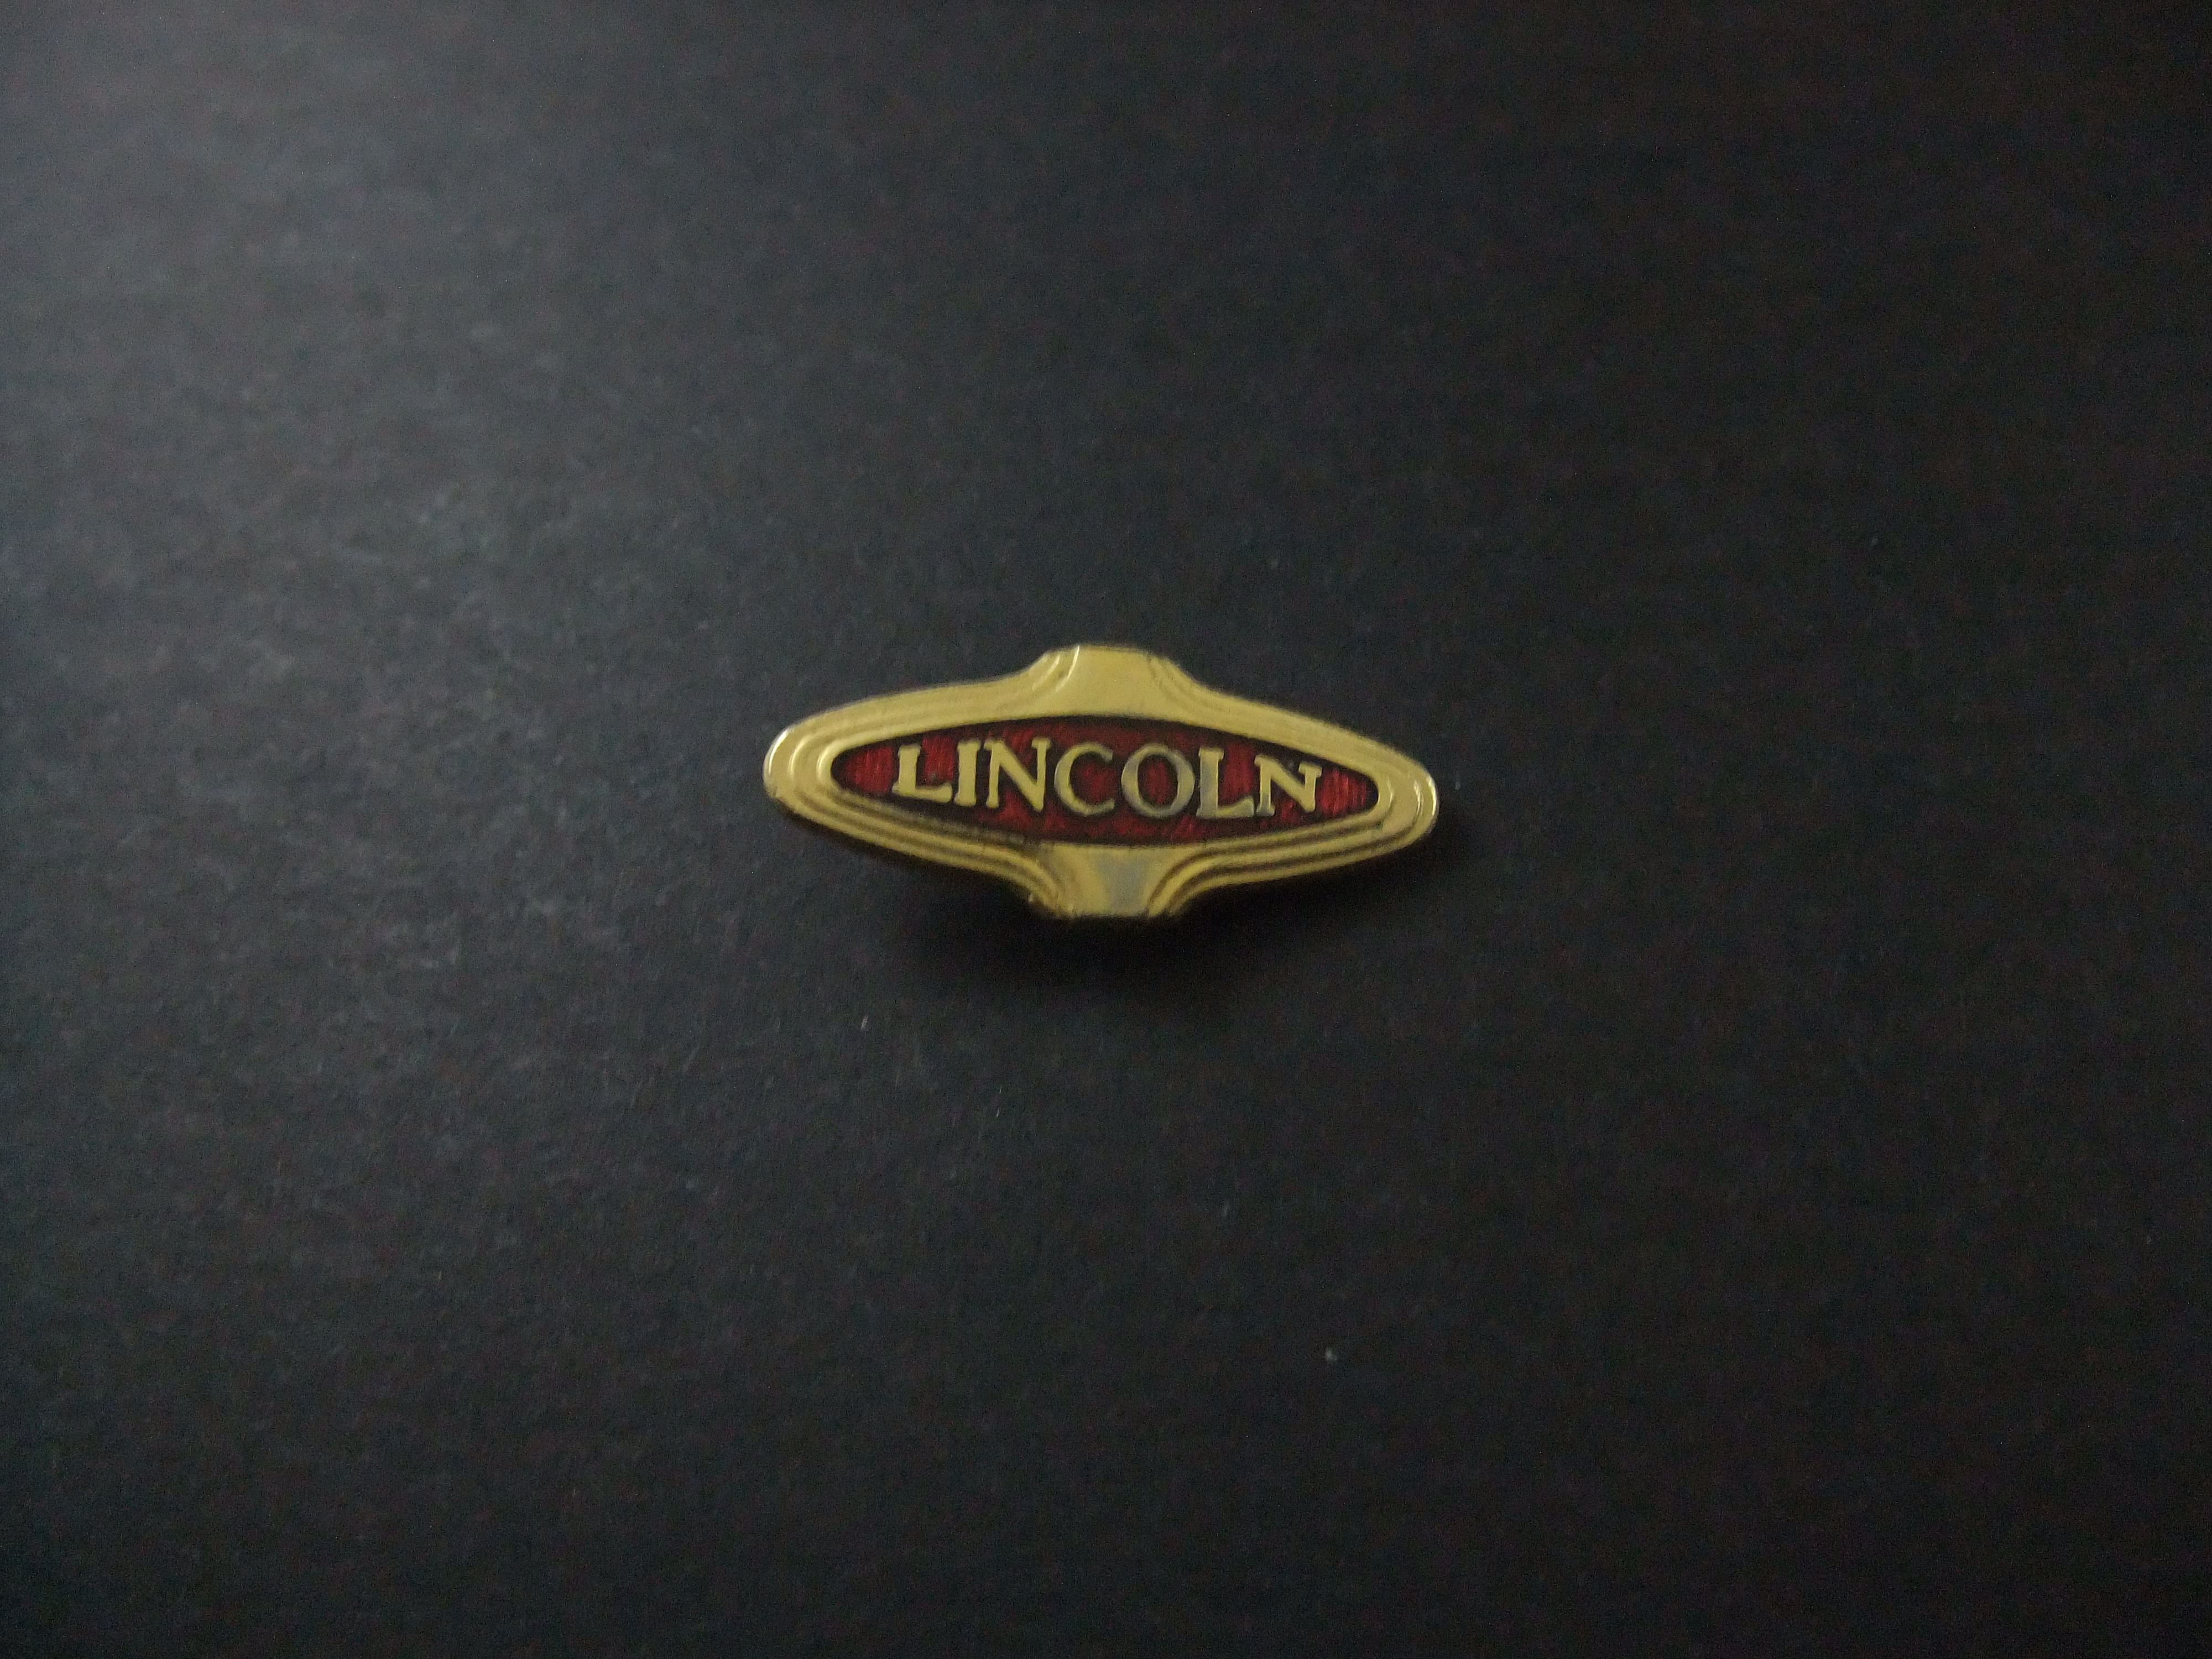 Lincoln V-12 Amerikaans merk van luxeauto's, logo